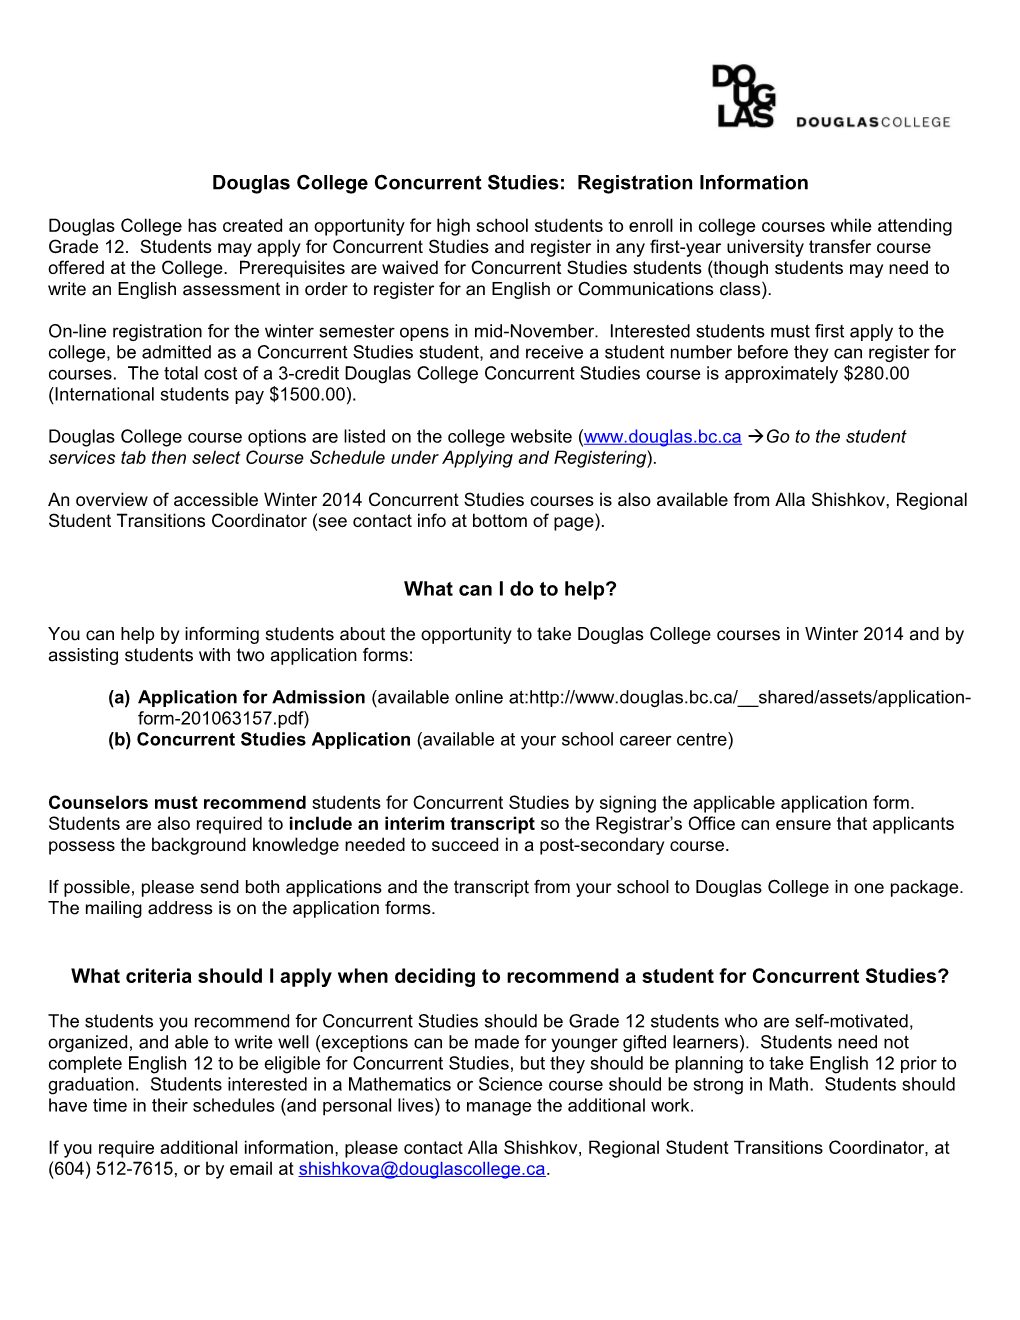 Douglas College Concurrent Studies Courses